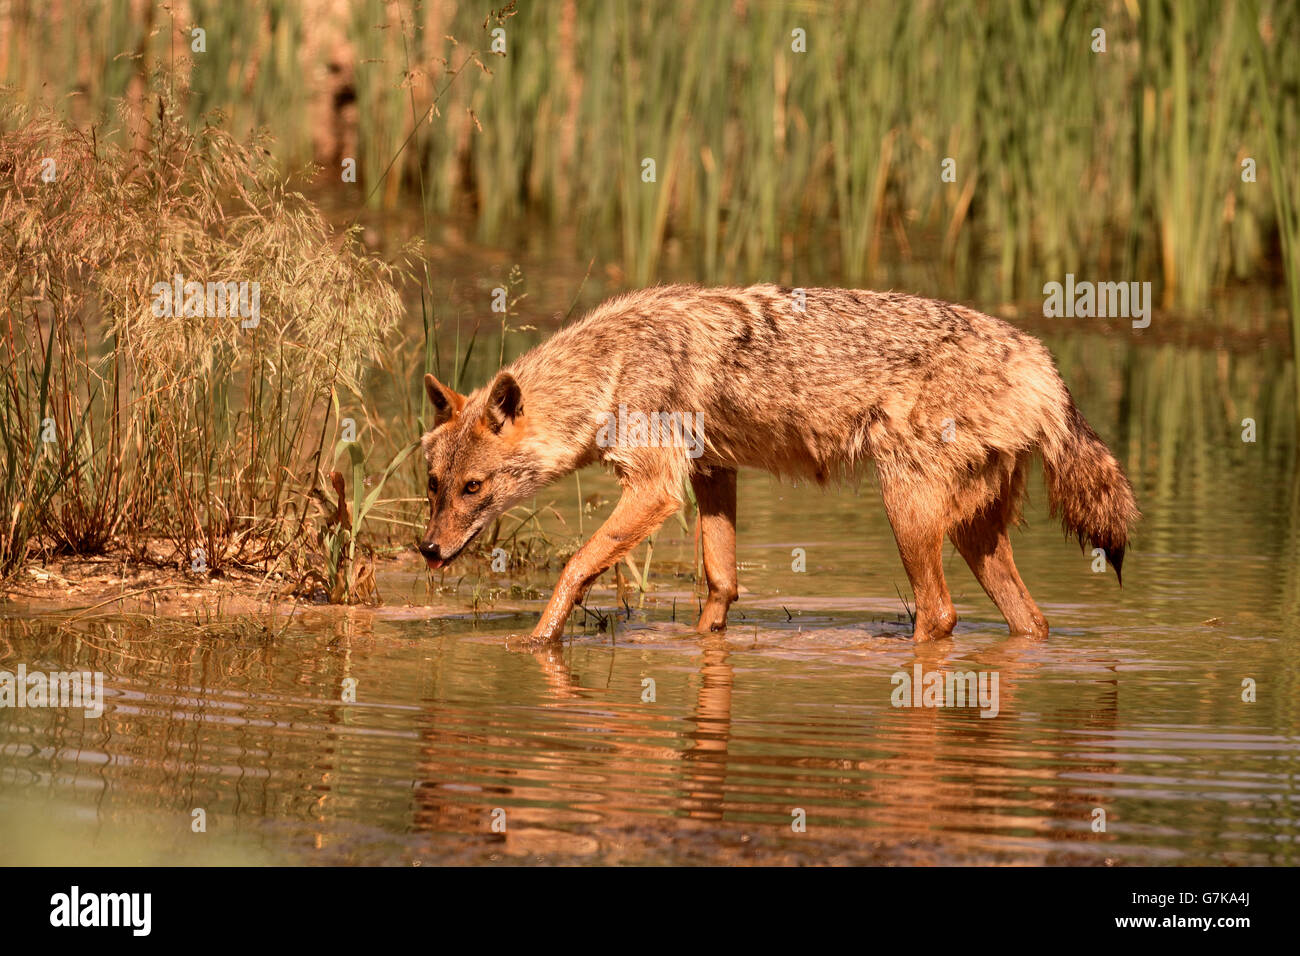 European jackal, Canis aureus moreoticus, Single mammal in water, Romania, June 2016 Stock Photo